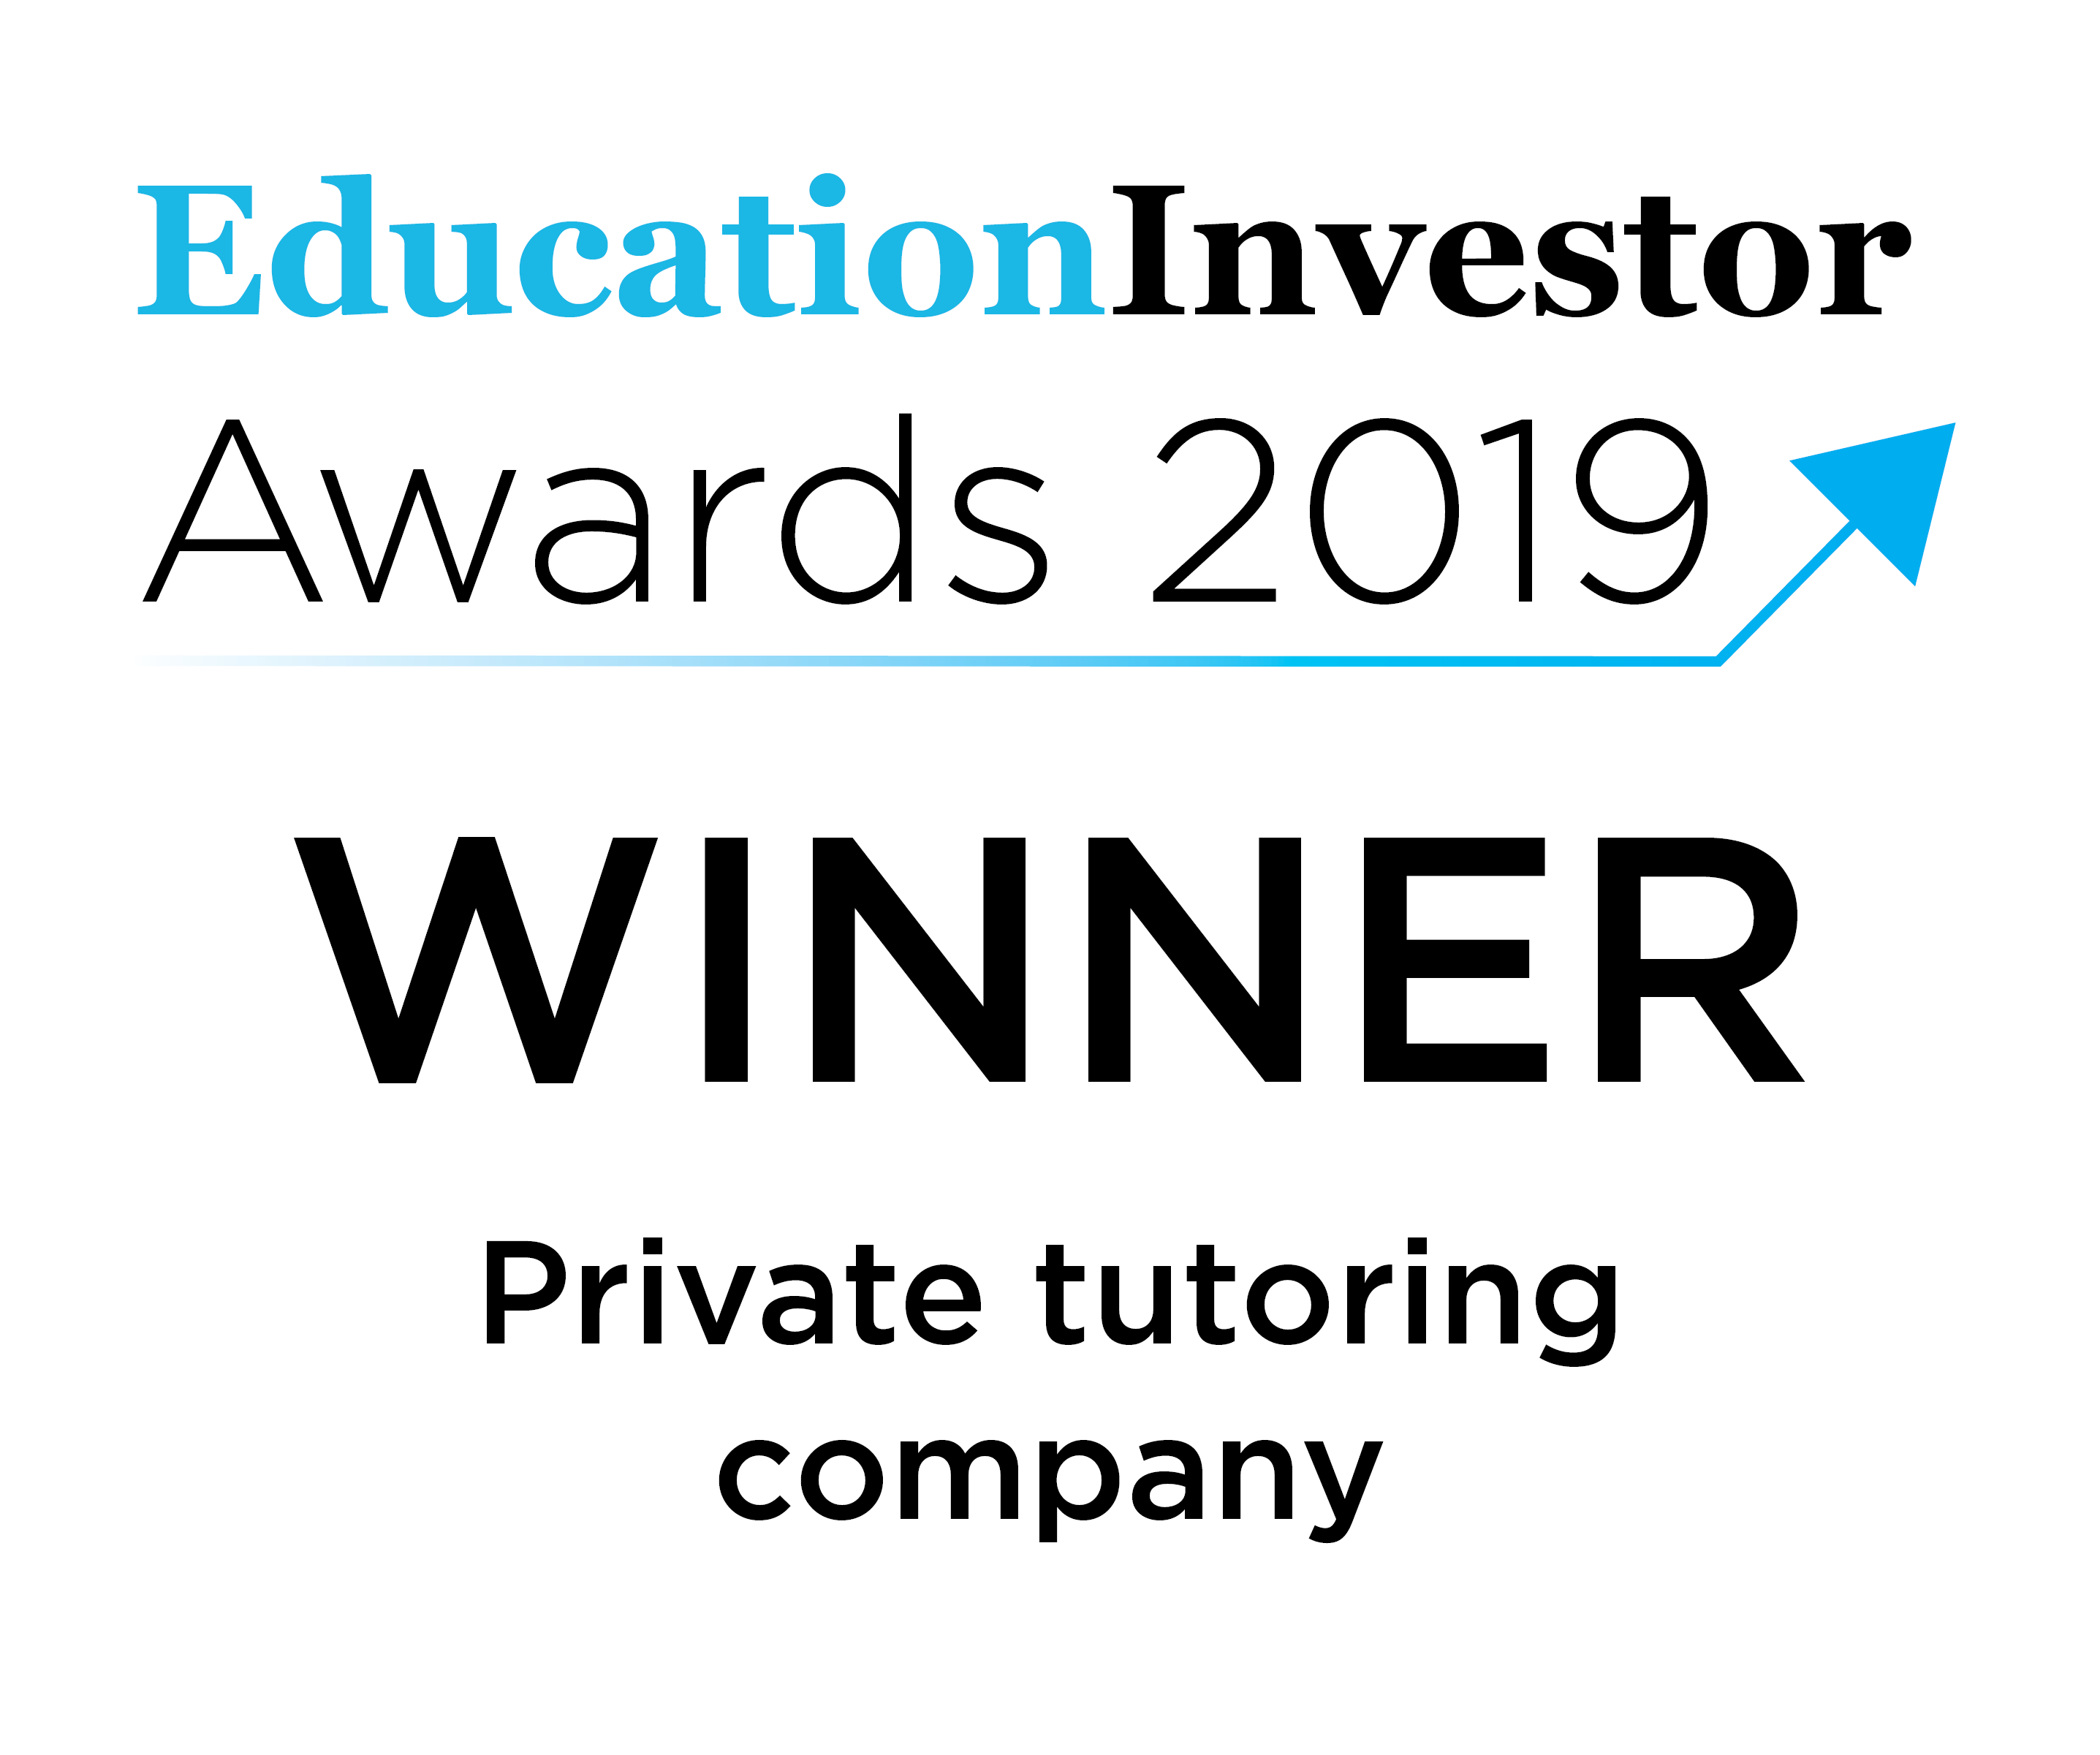 Education Investor Awards 2019 Winner Private tutoring company